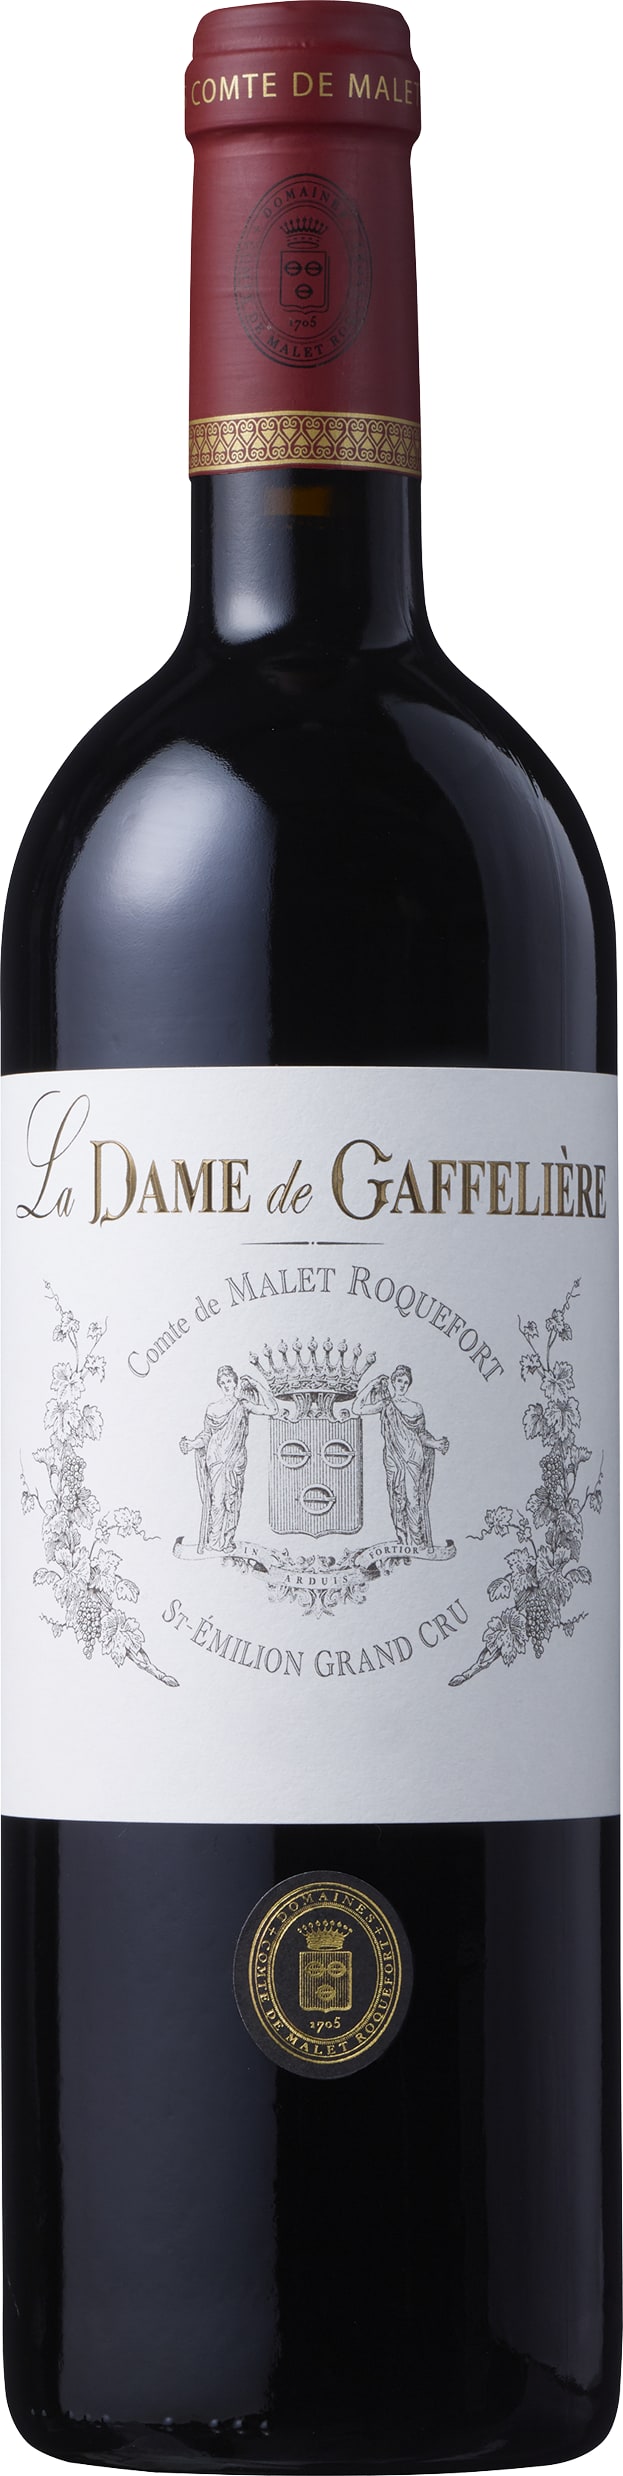 Chateau La Gaffeliere La Dame de Gaffeliere, Saint Emilion Grand Cru 2016 75cl - Buy Chateau La Gaffeliere Wines from GREAT WINES DIRECT wine shop